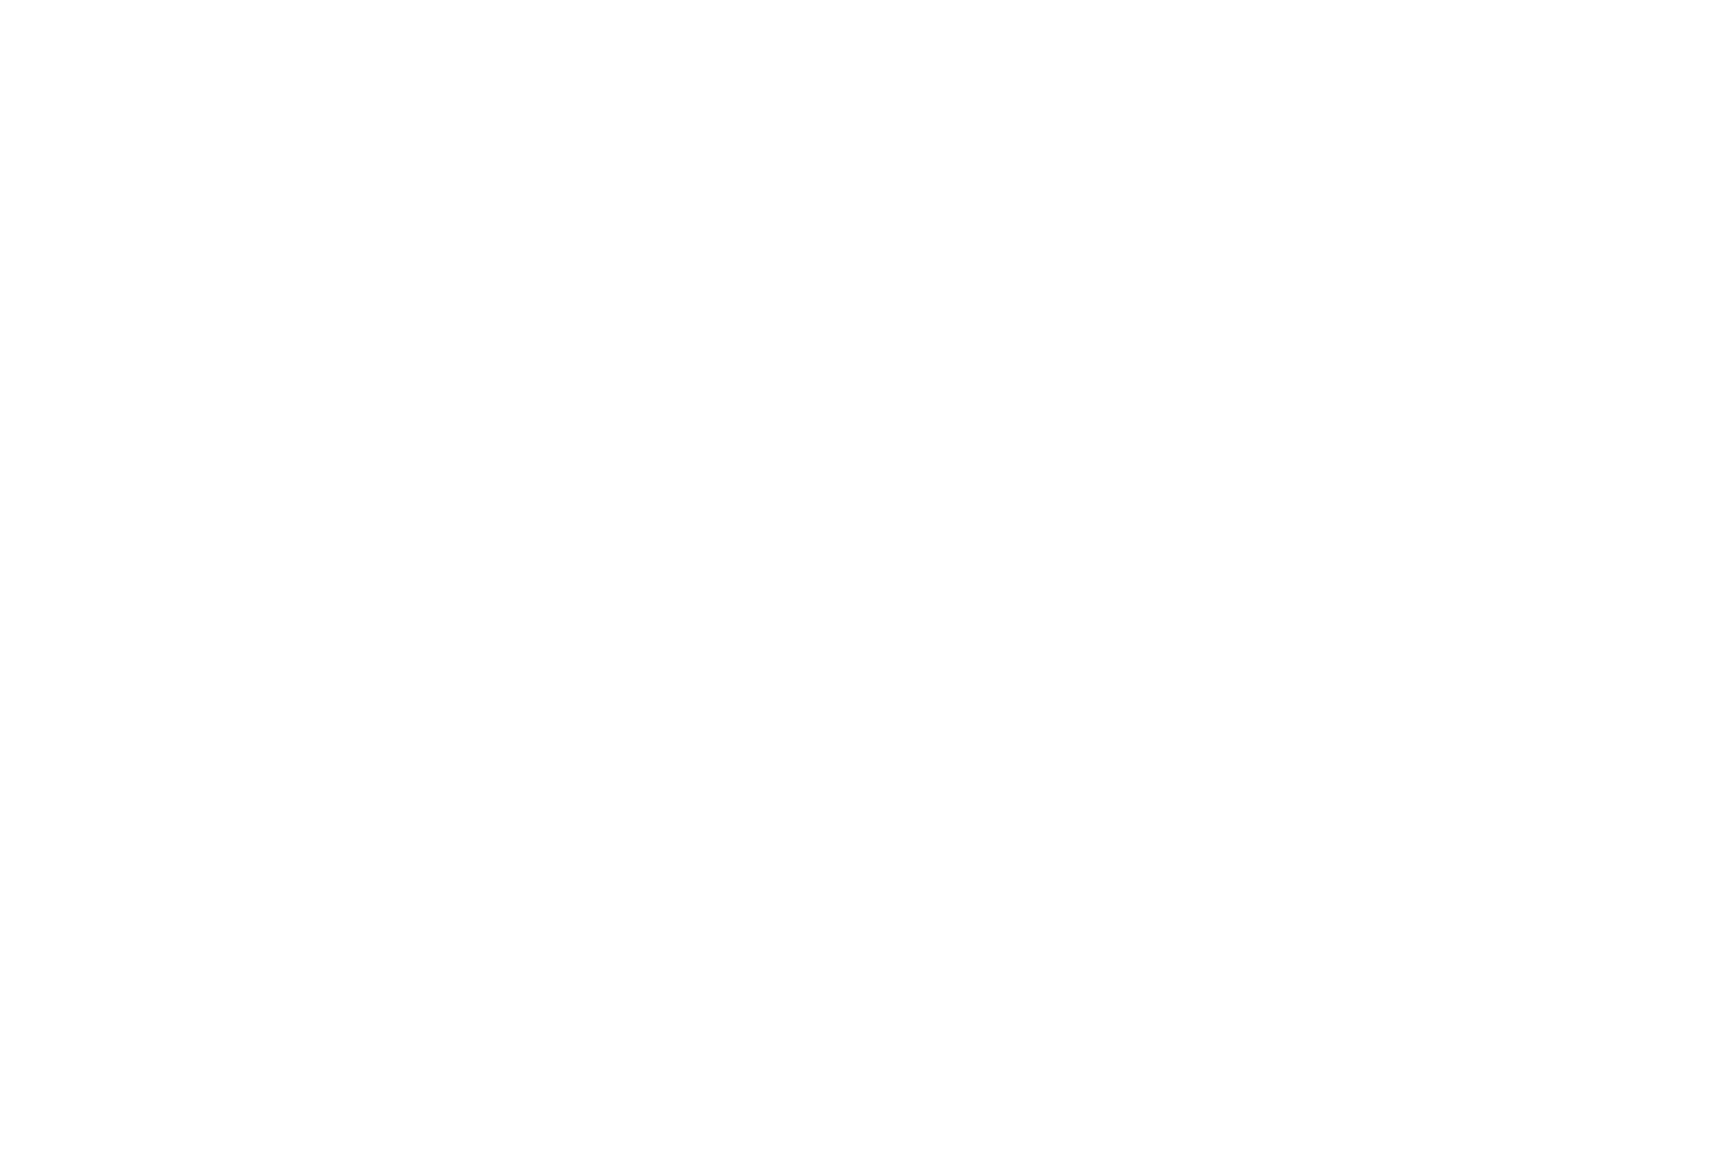 DIRECTOR LGBT FILM - Best Director Award - London - 2020